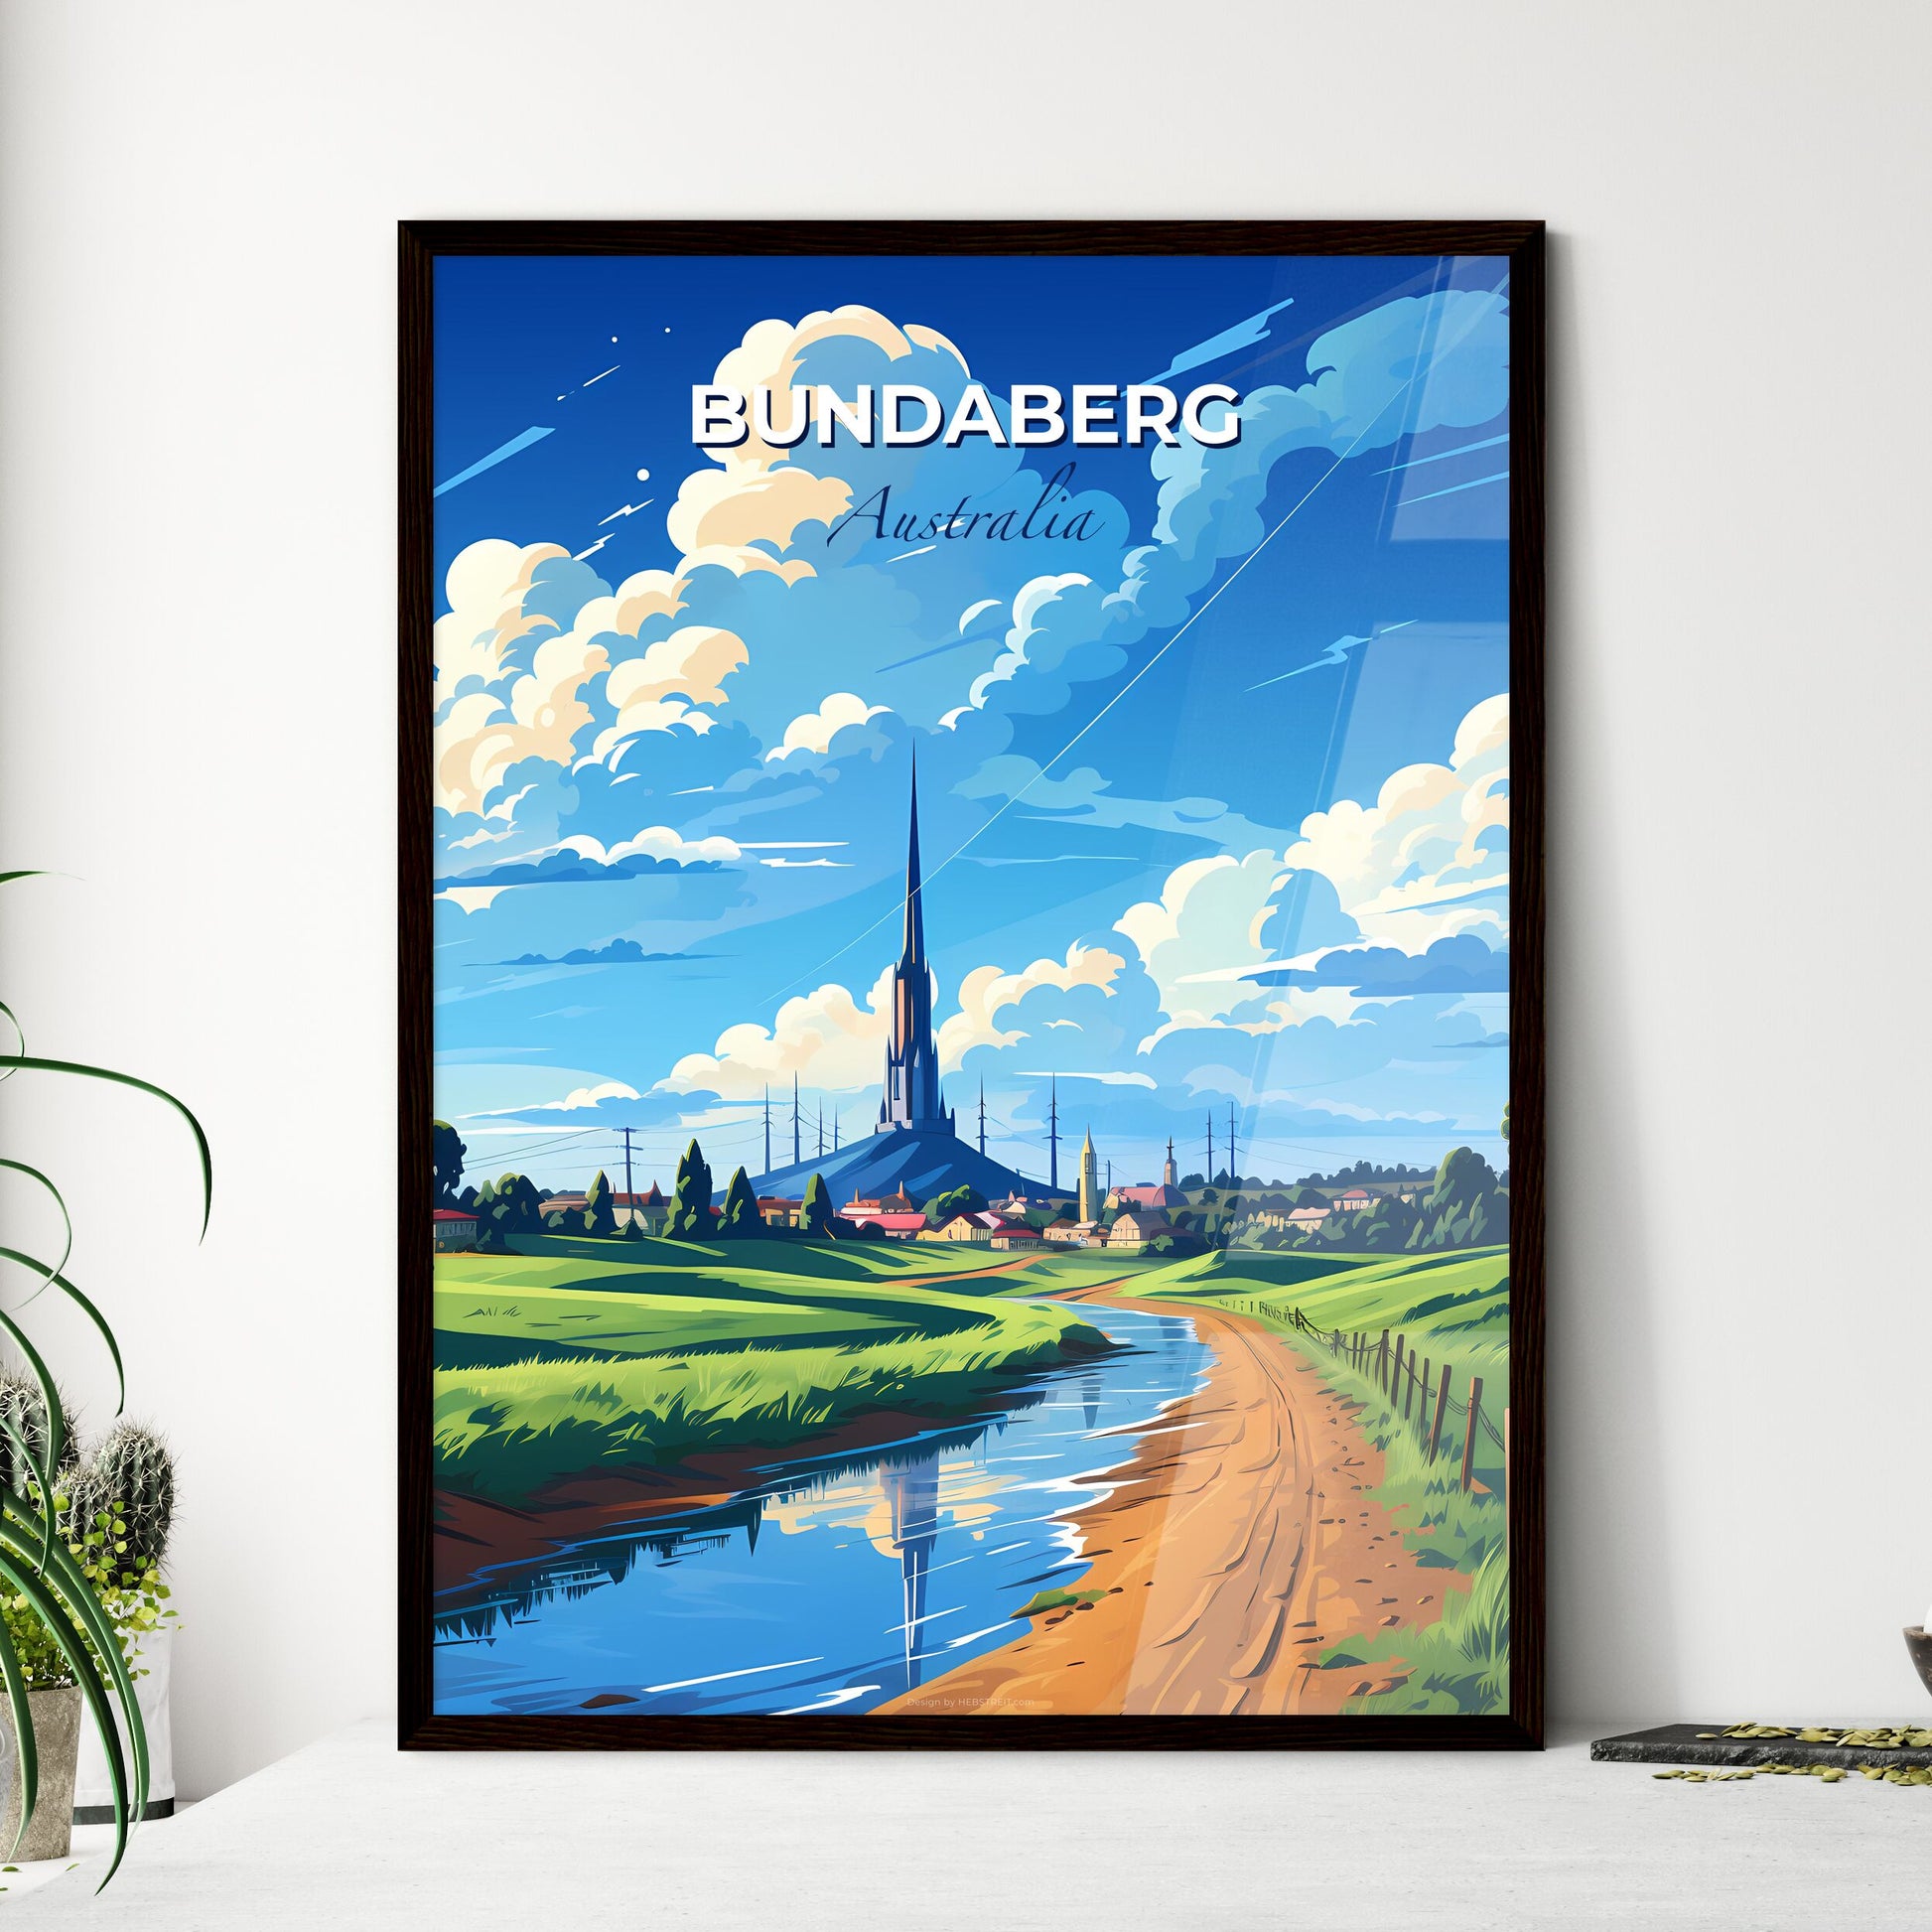 Vibrant Bundaberg Skyline Painting - Artistic River Landscape with Tower Default Title